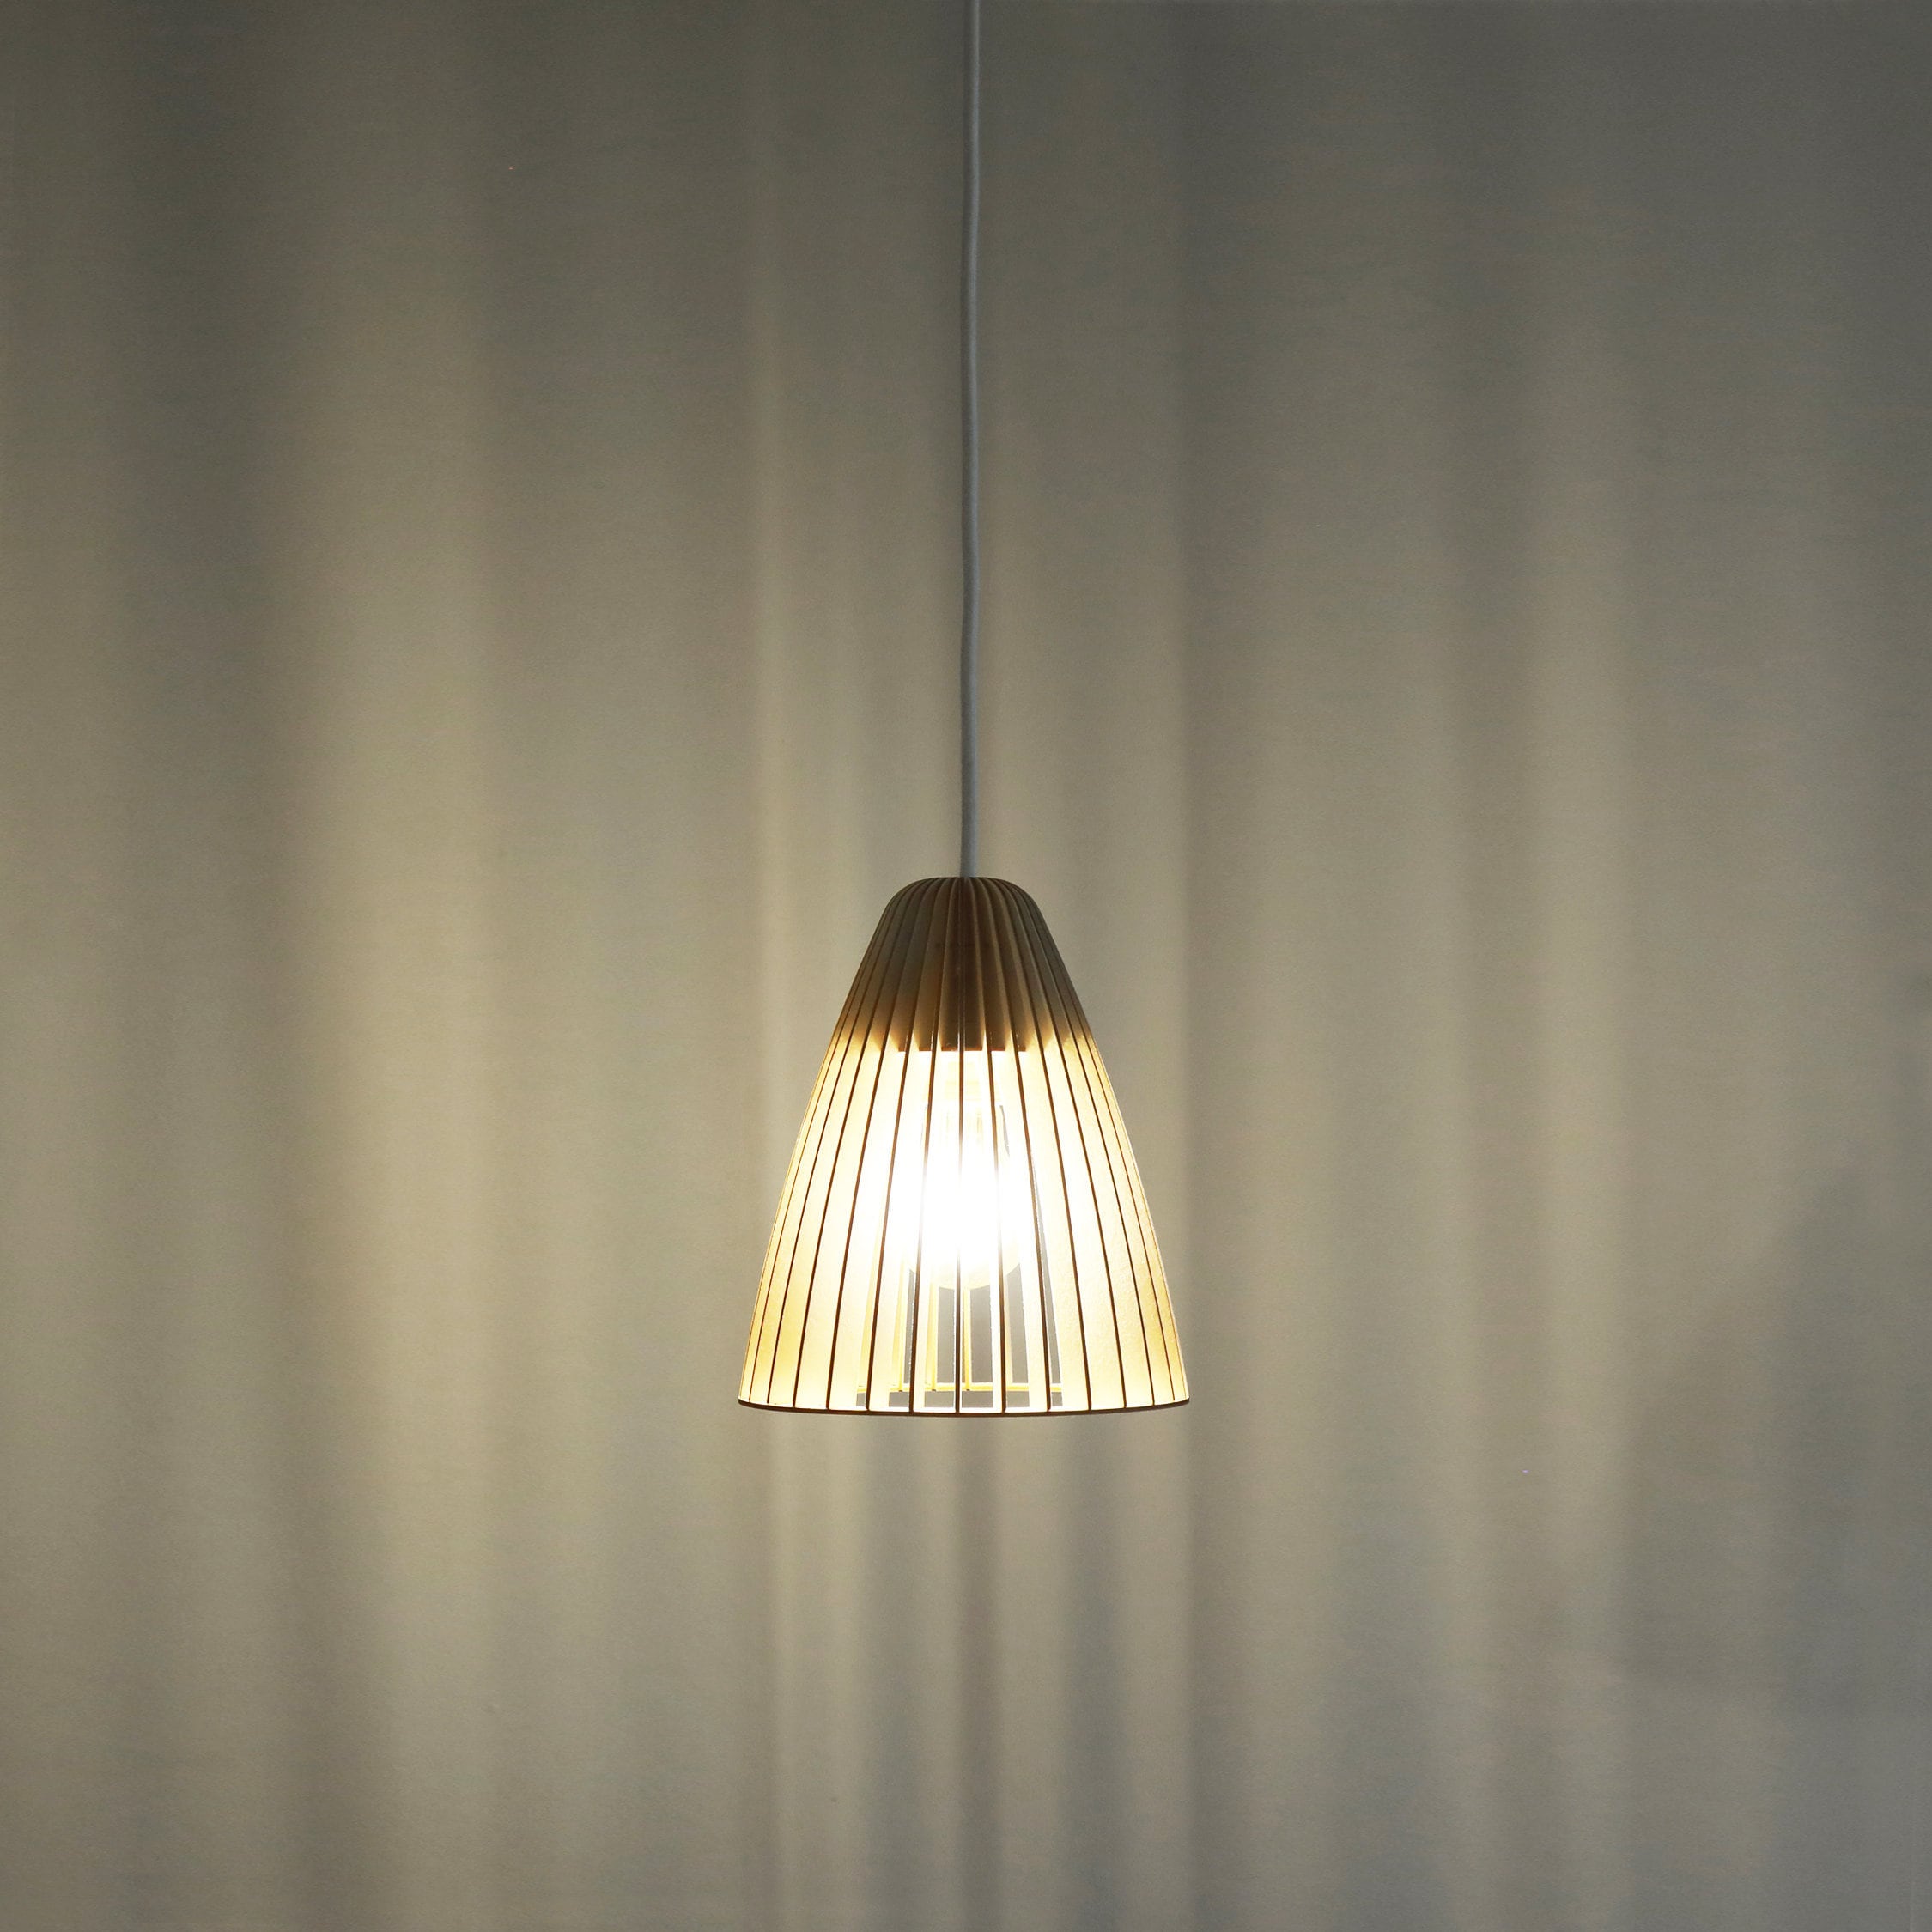 Lampe Suspension Bois Carton Scandinave Au Design Minimaliste Ecologique Cocoon Recyclé Kido Maranta